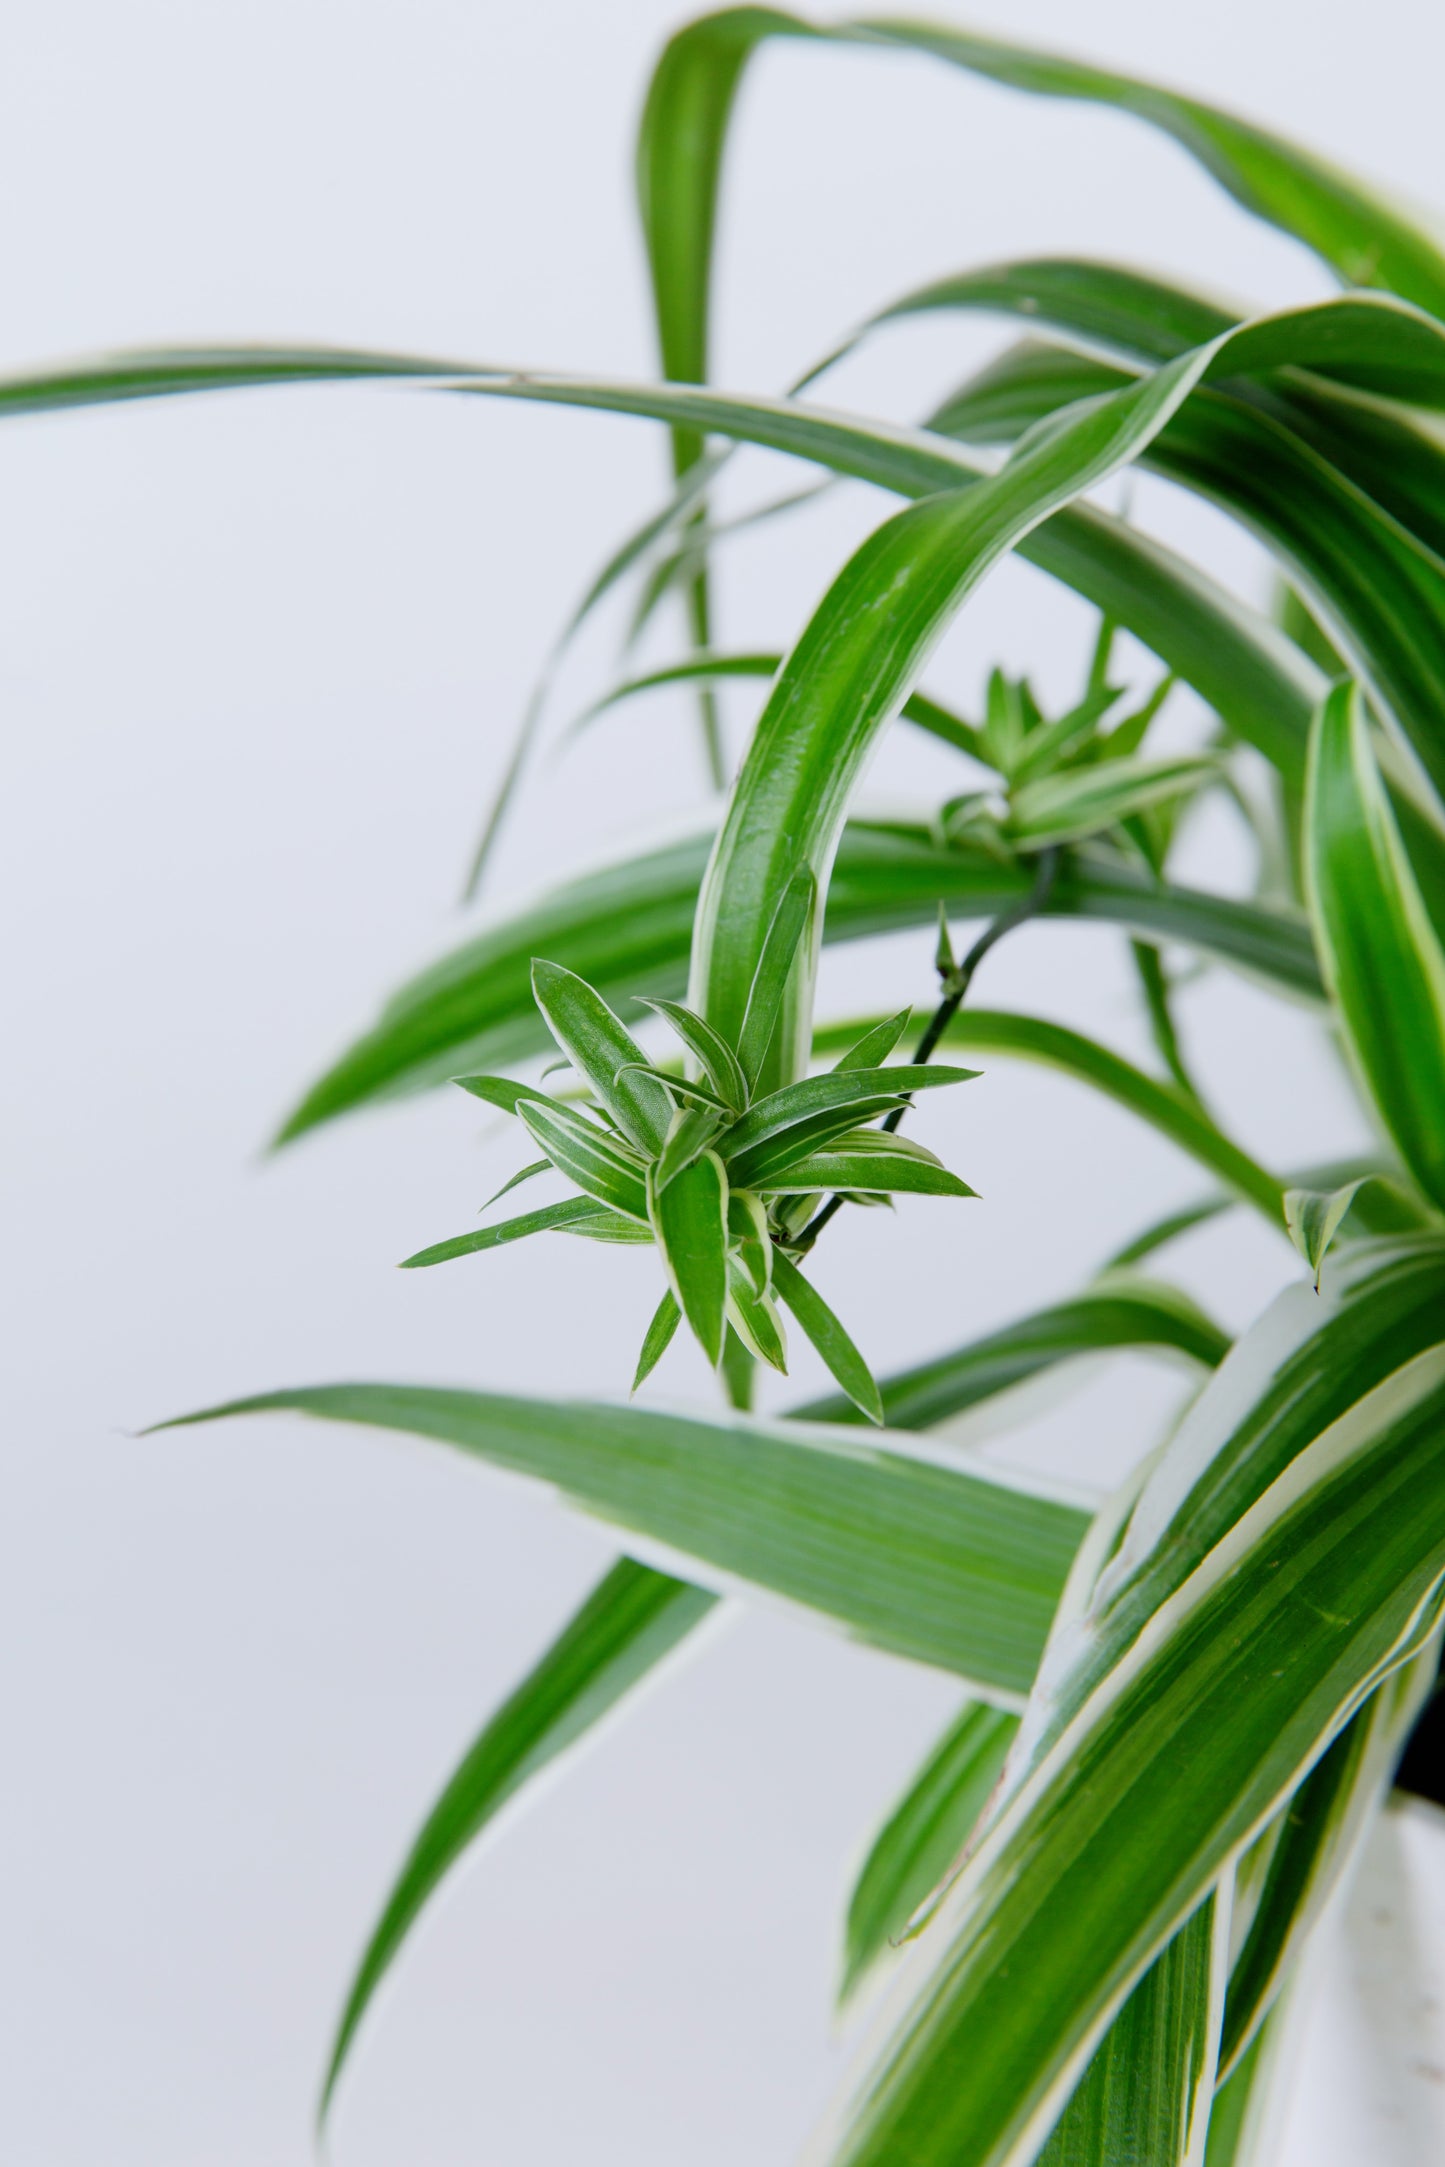 Spider Plant | Chlorophyll Comosum